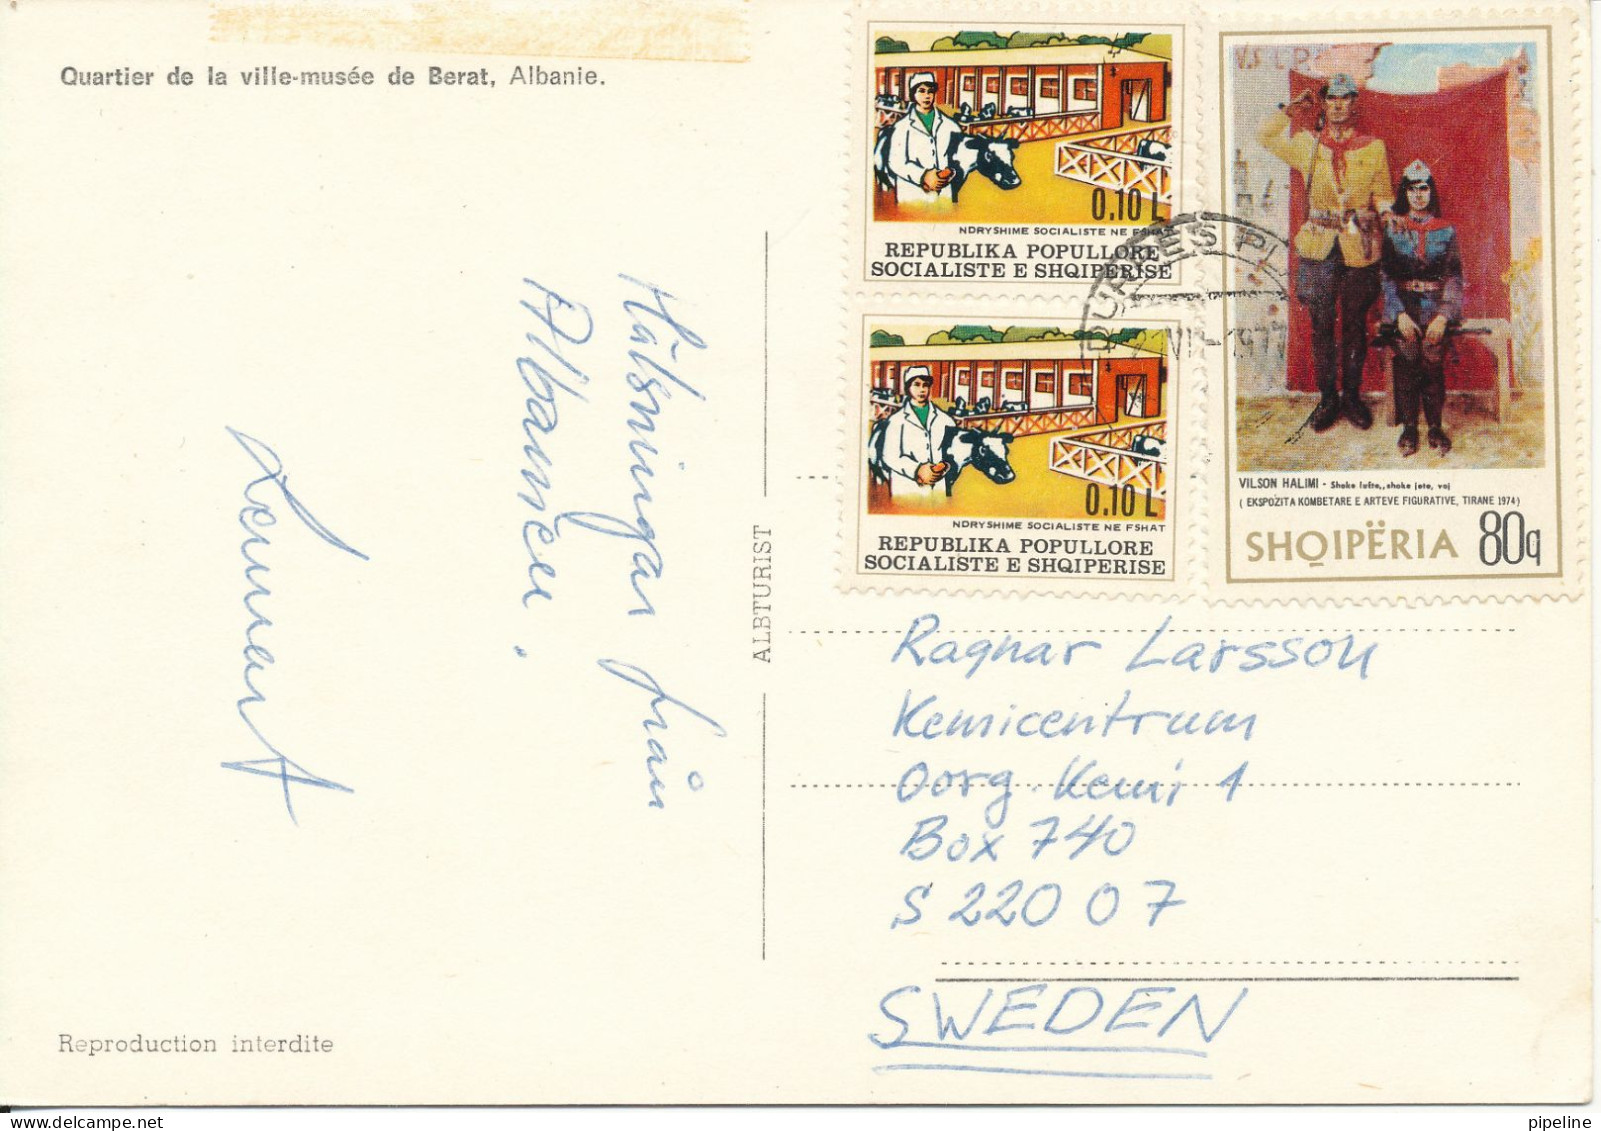 Albania Postcard Sent To Sweden 21-6-1977 - Albanie